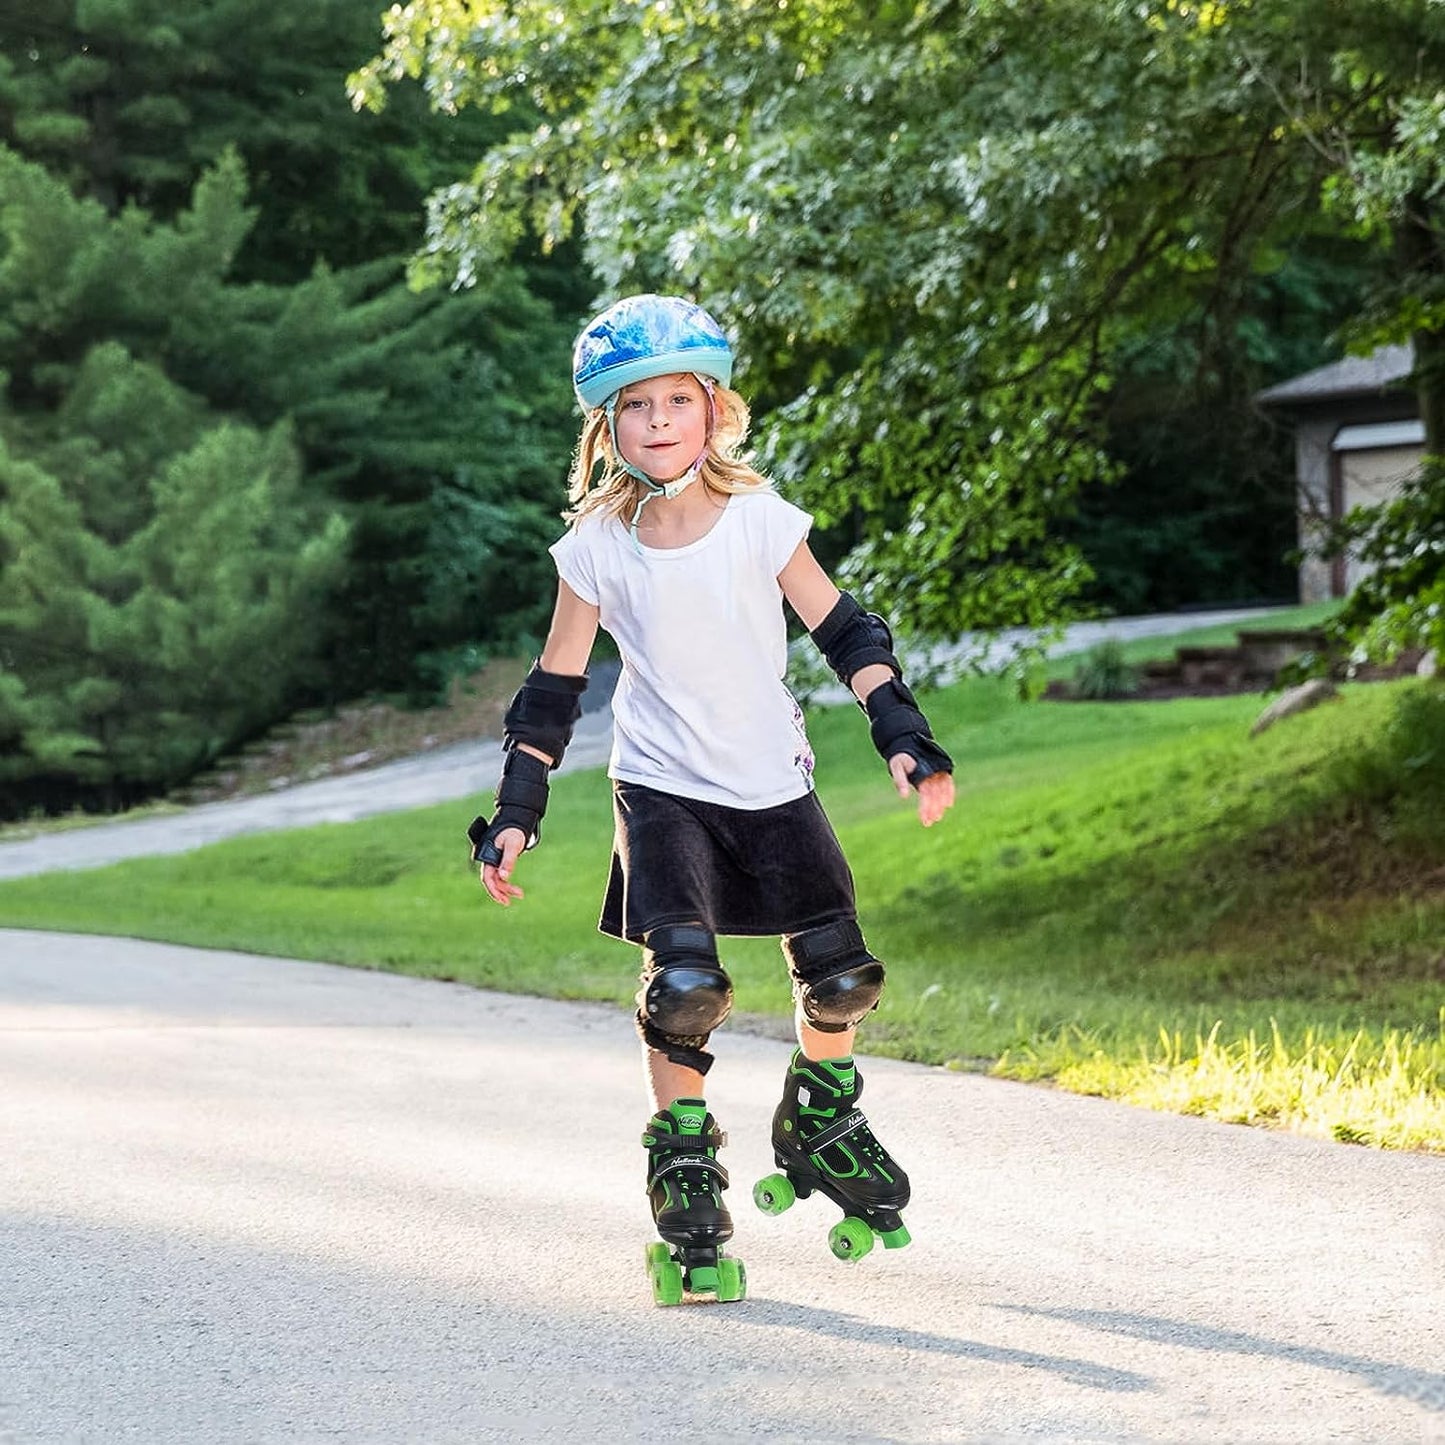 Nattork Adjustable Roller Skates for Kids-Green